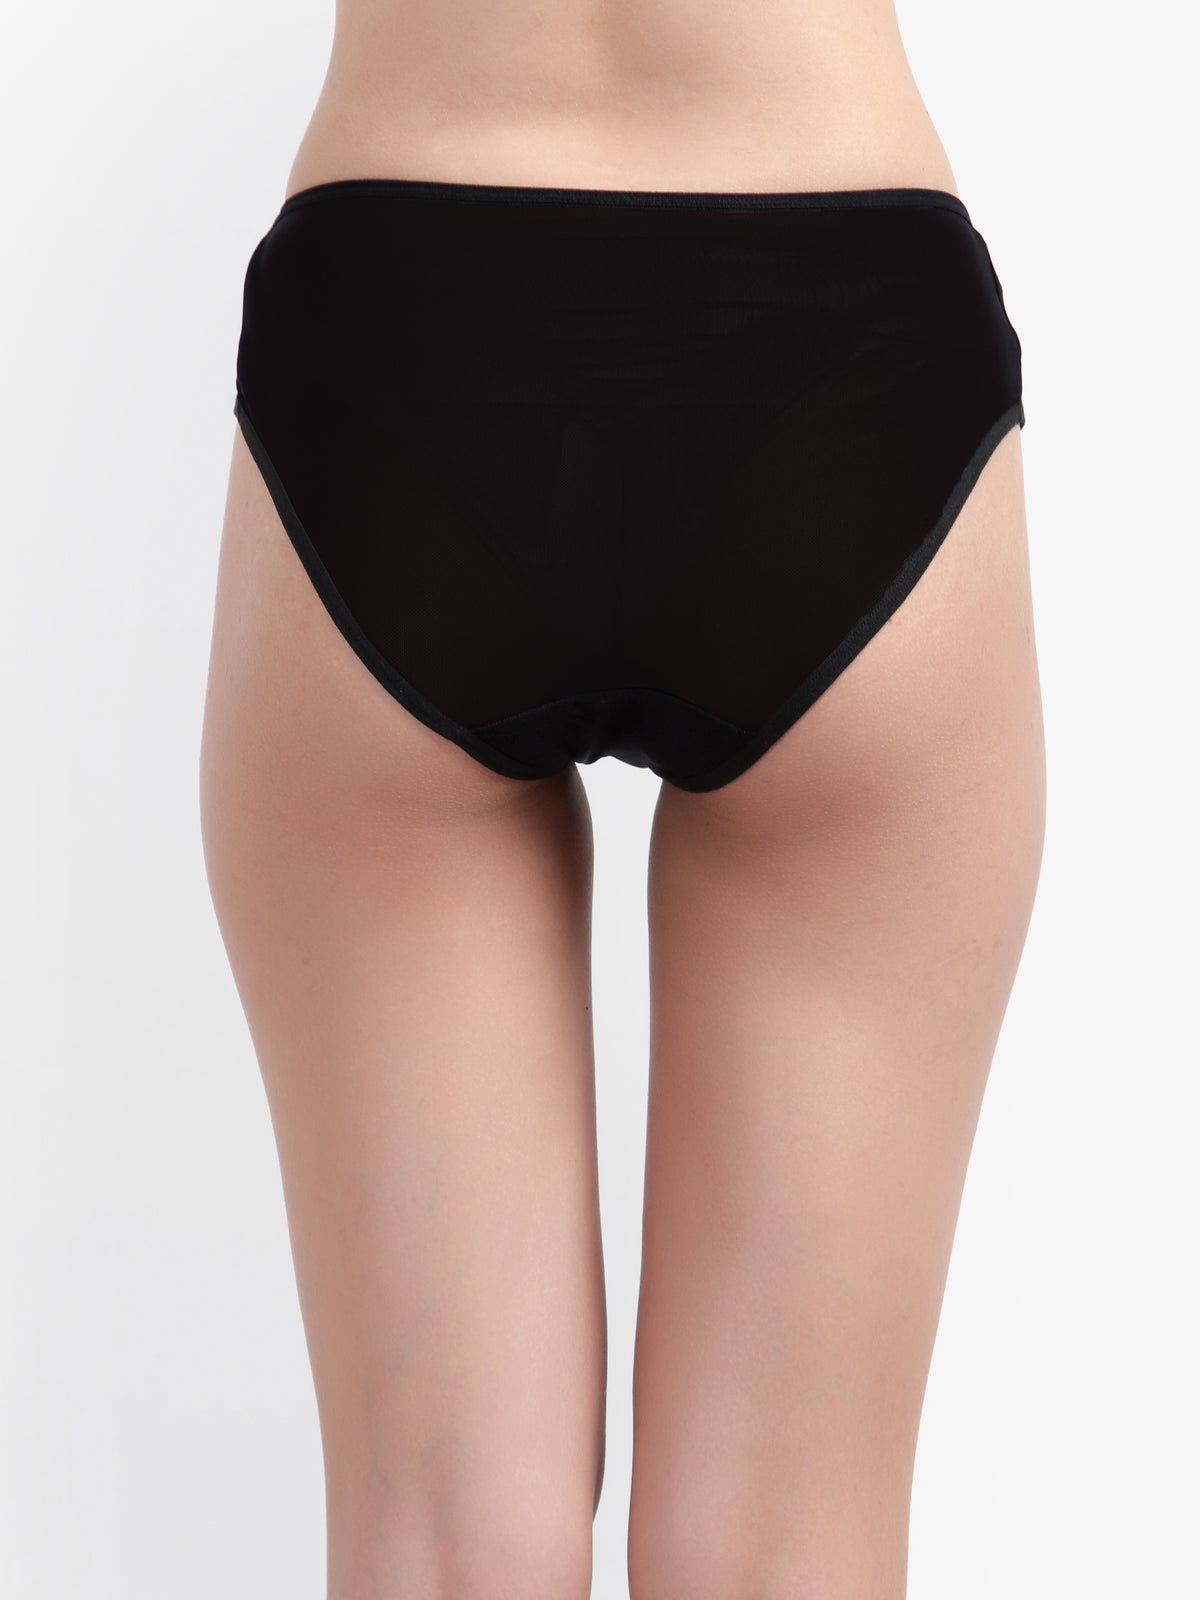 Bruchi Club Air Mesh See Through Transparent Women Panty